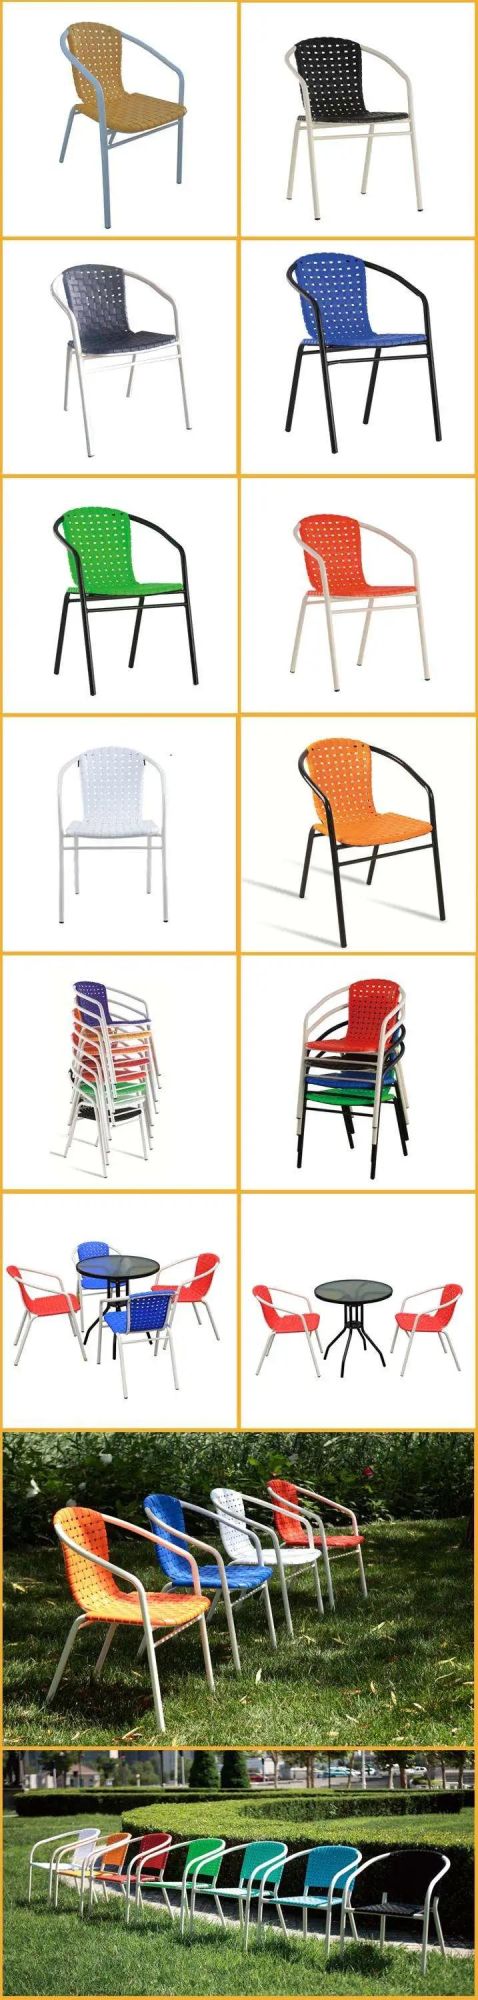 Outdoor Furniture Restaurant Luxury Single Rattan Plastic Chairs